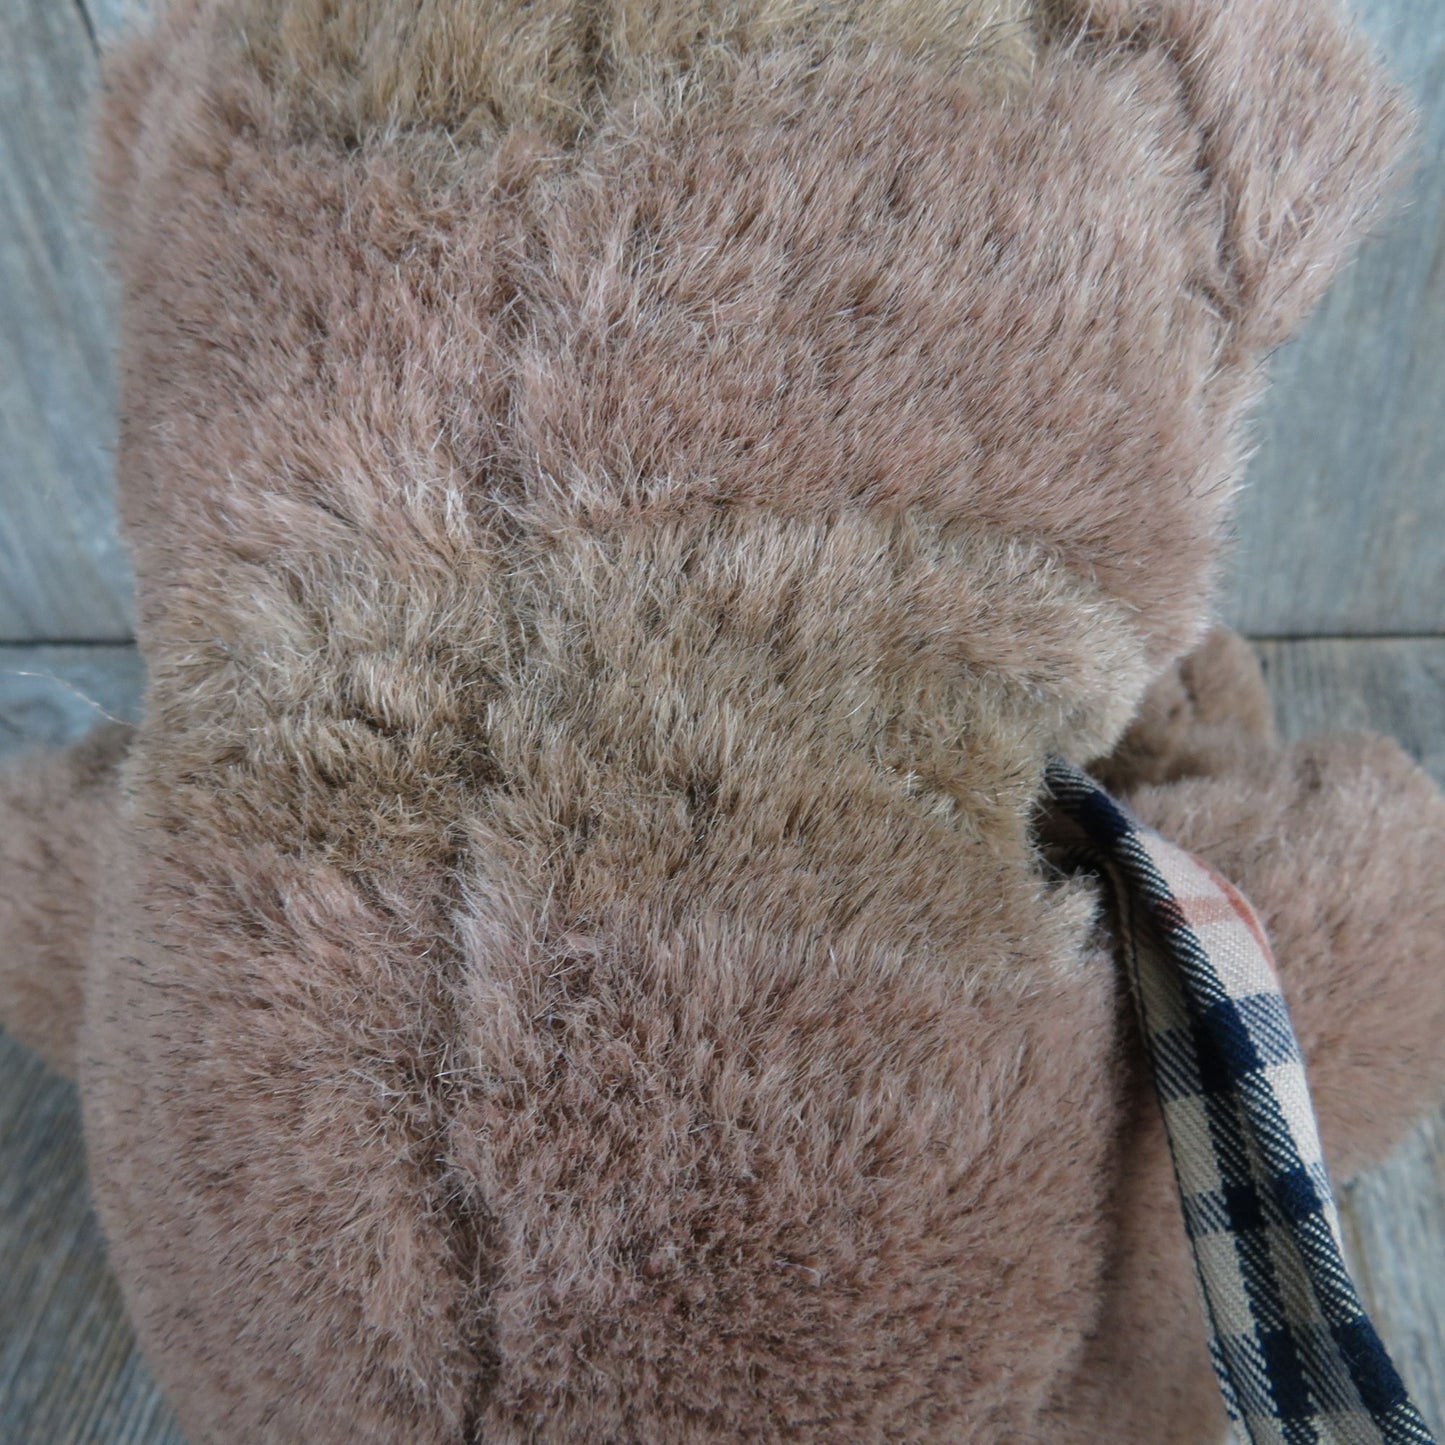 Vintage Teddy Bear Plush Arthur Stuffed Bear Plush Dakin 1984 Scarf Stuffed Animal